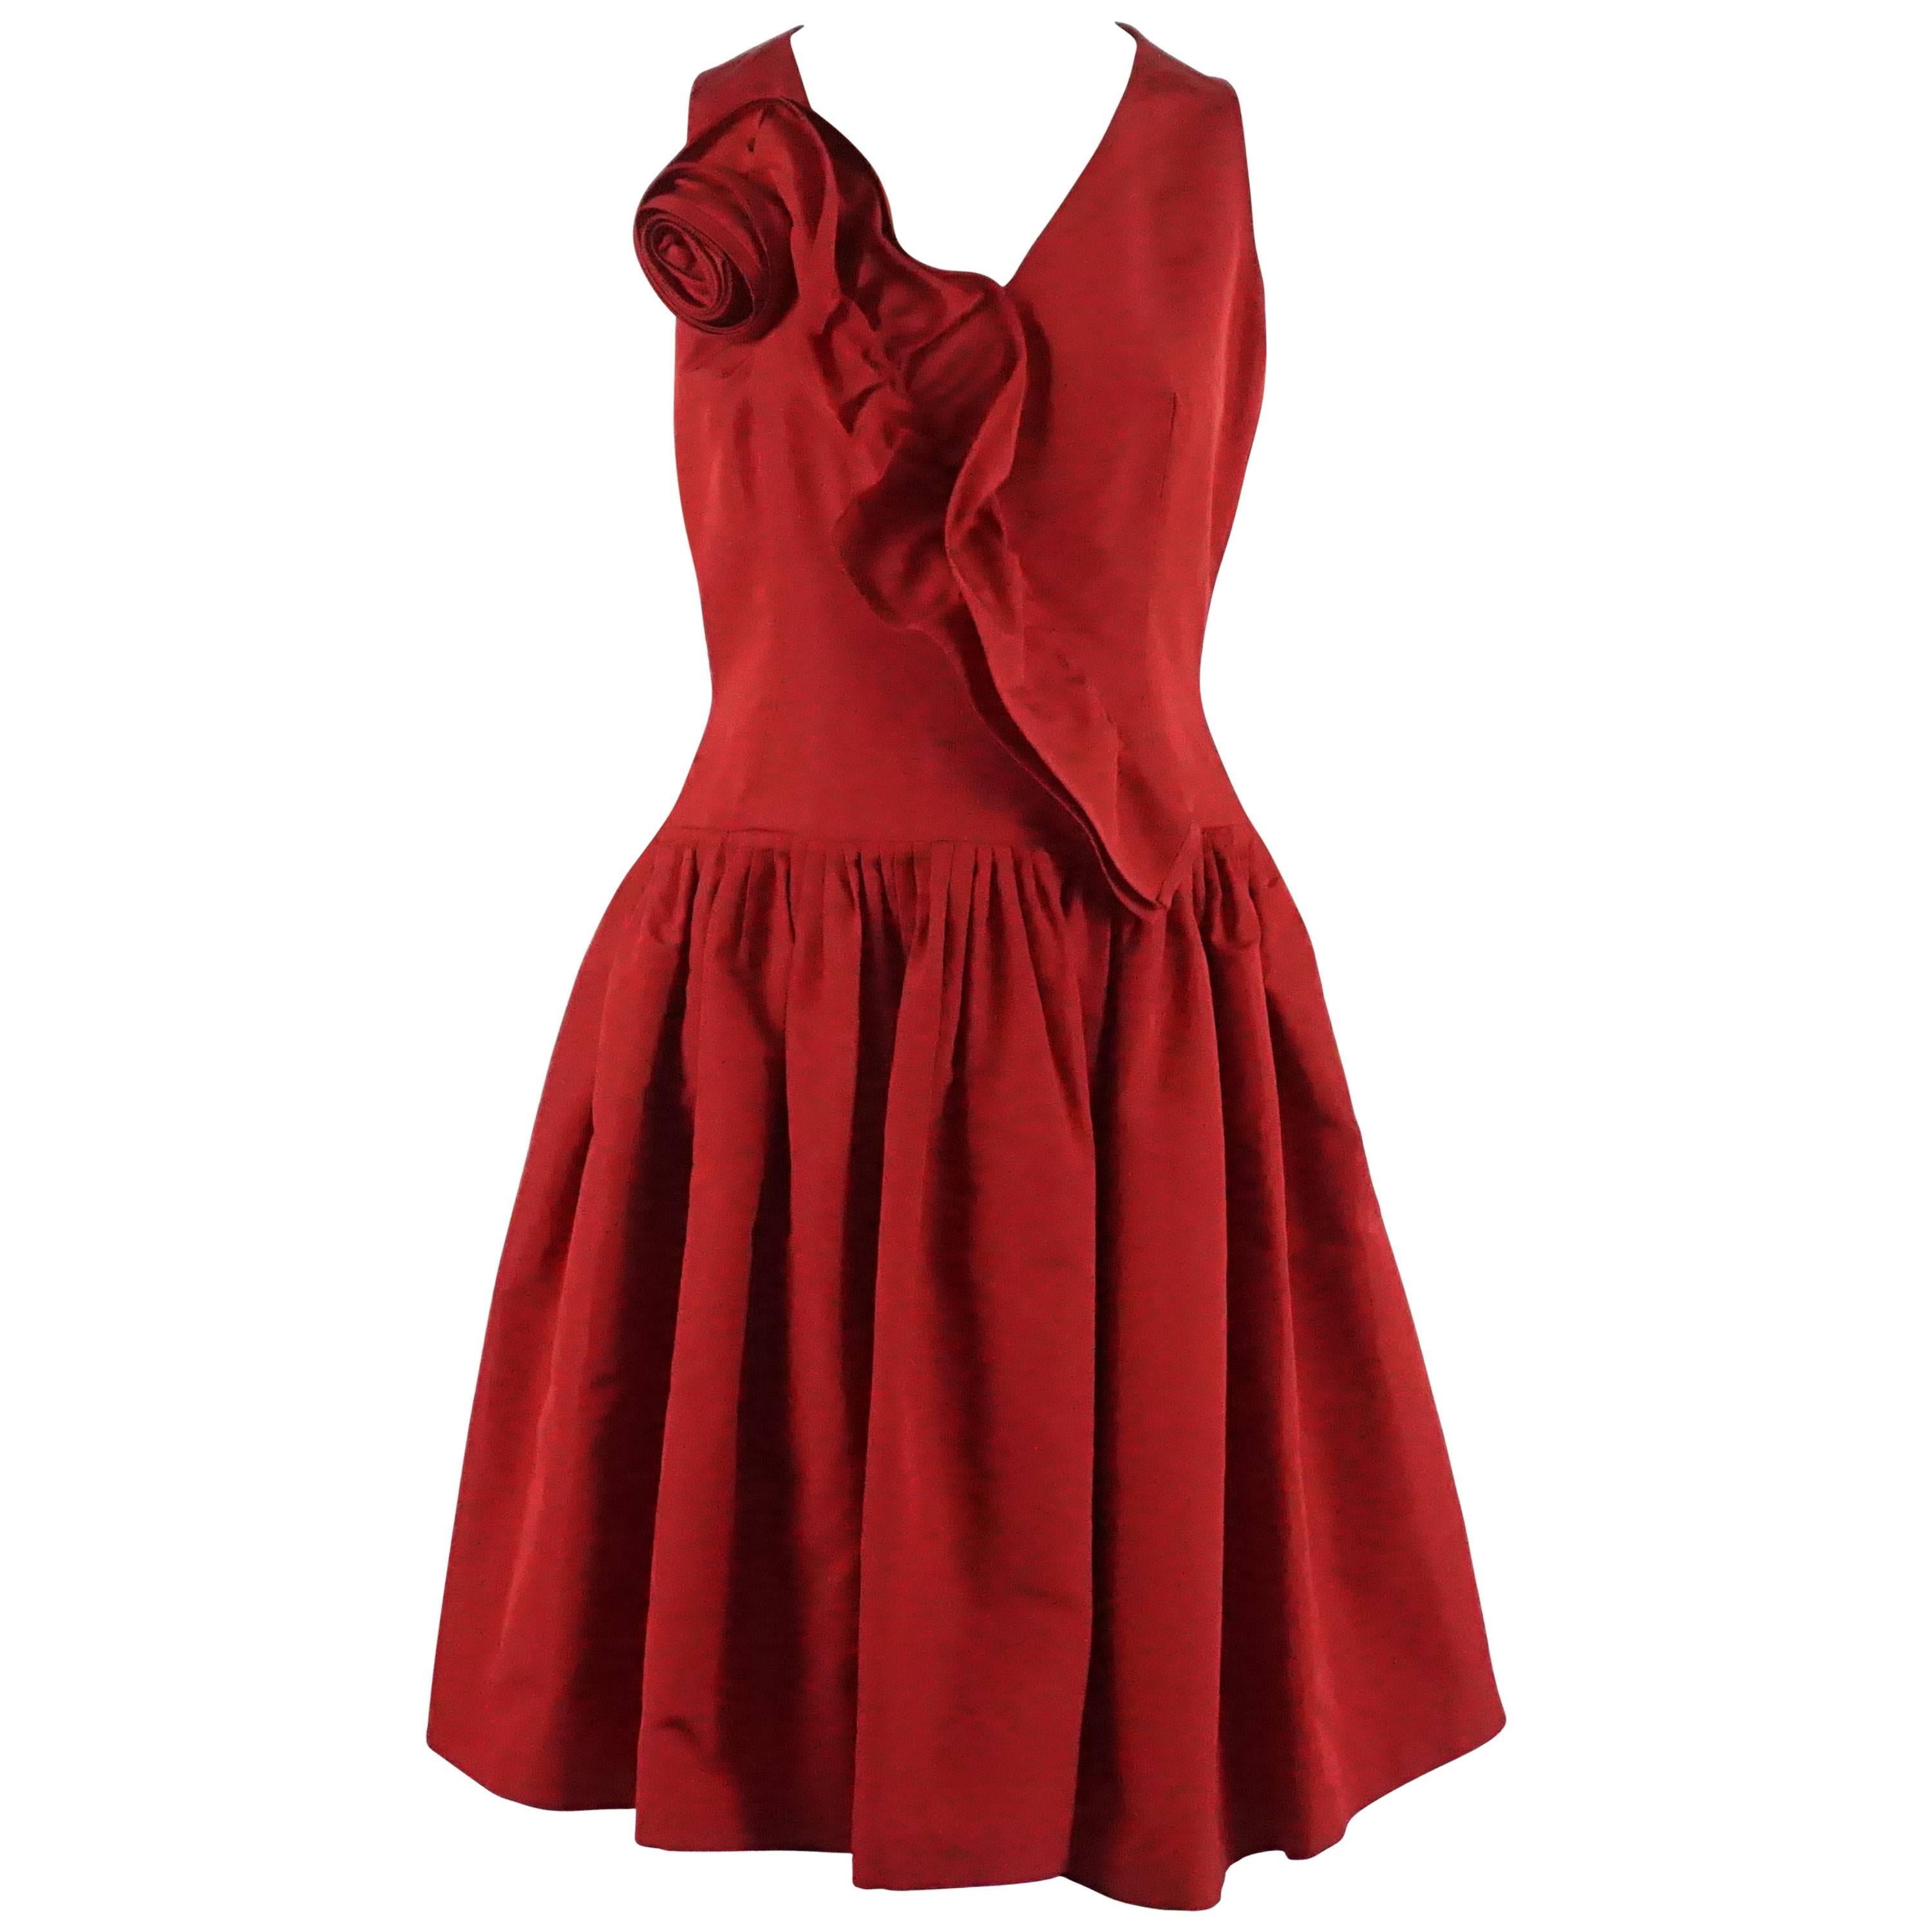 Oscar de la Renta Red Silk Taffeta Dress with Rose Detail - 6